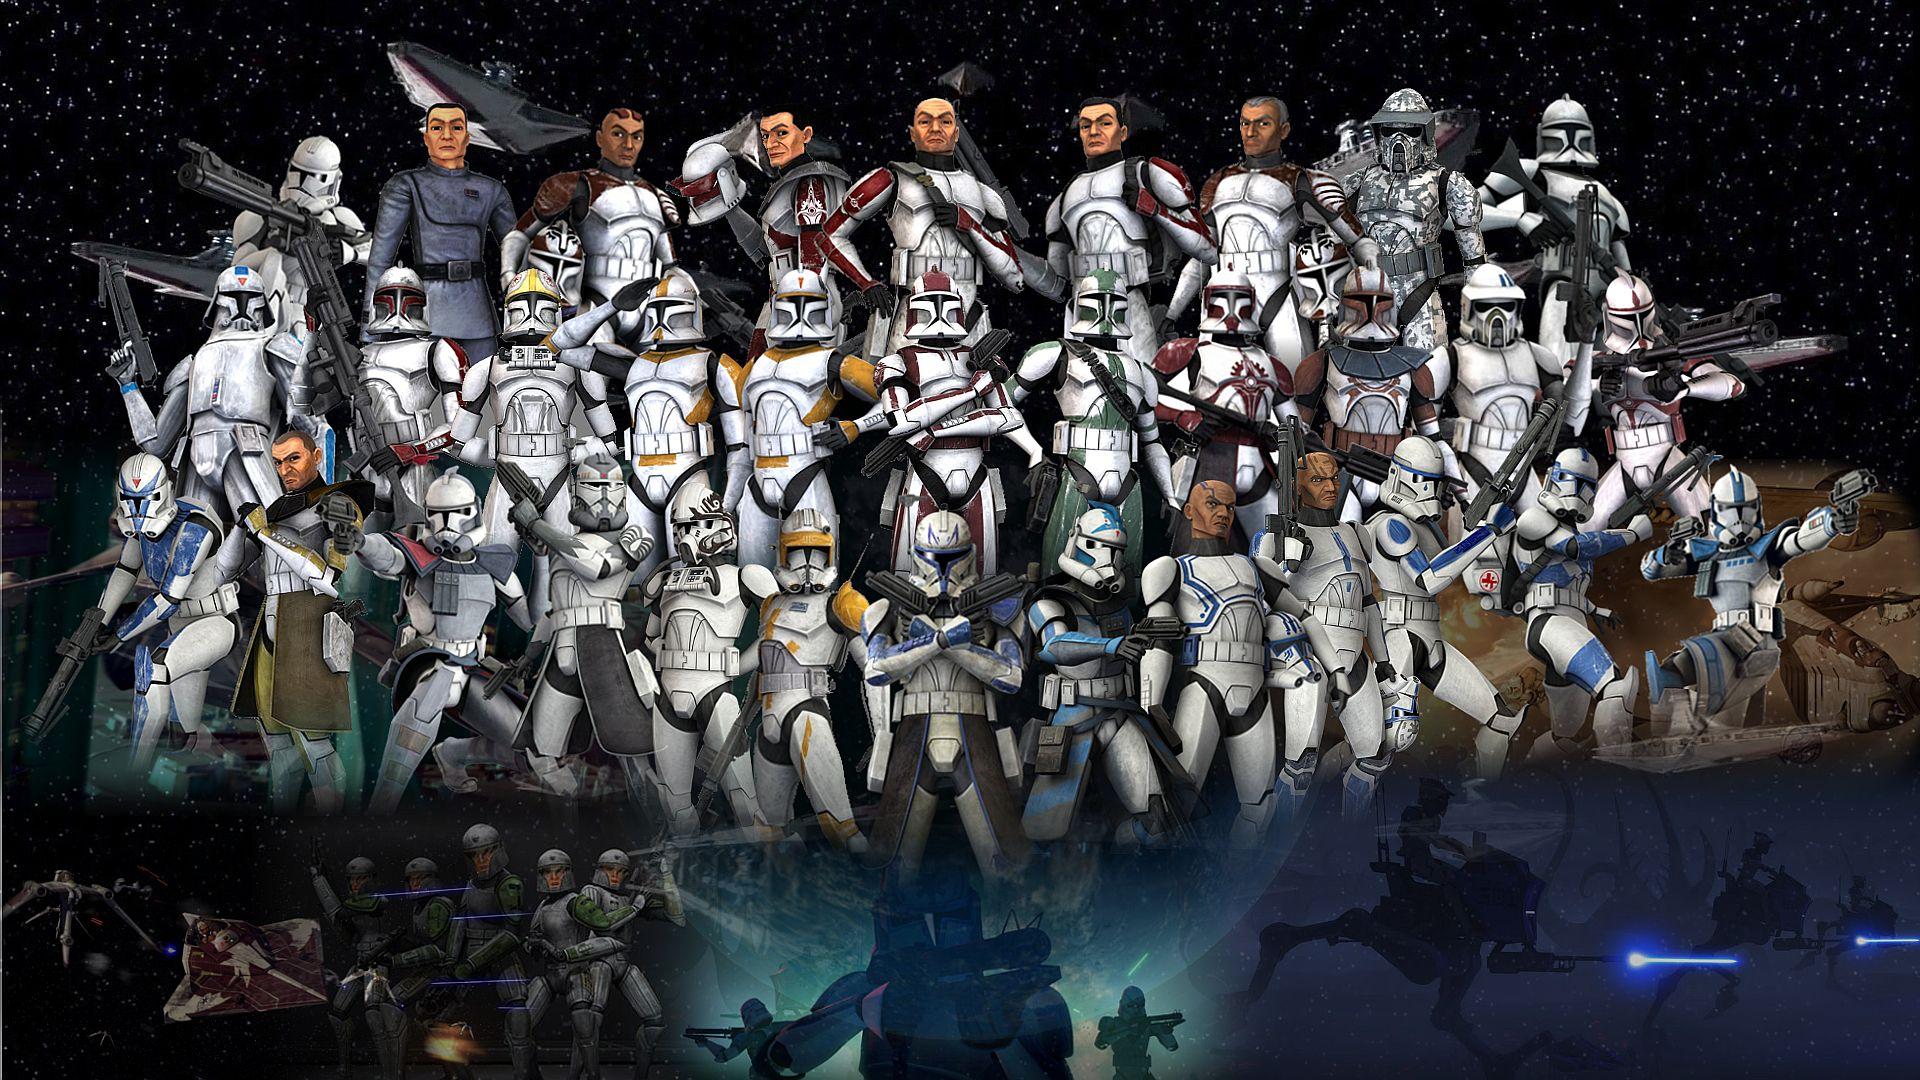 Clone Troopers Wallpaper. Star wars wallpaper, Star wars clone wars, Star wars trooper